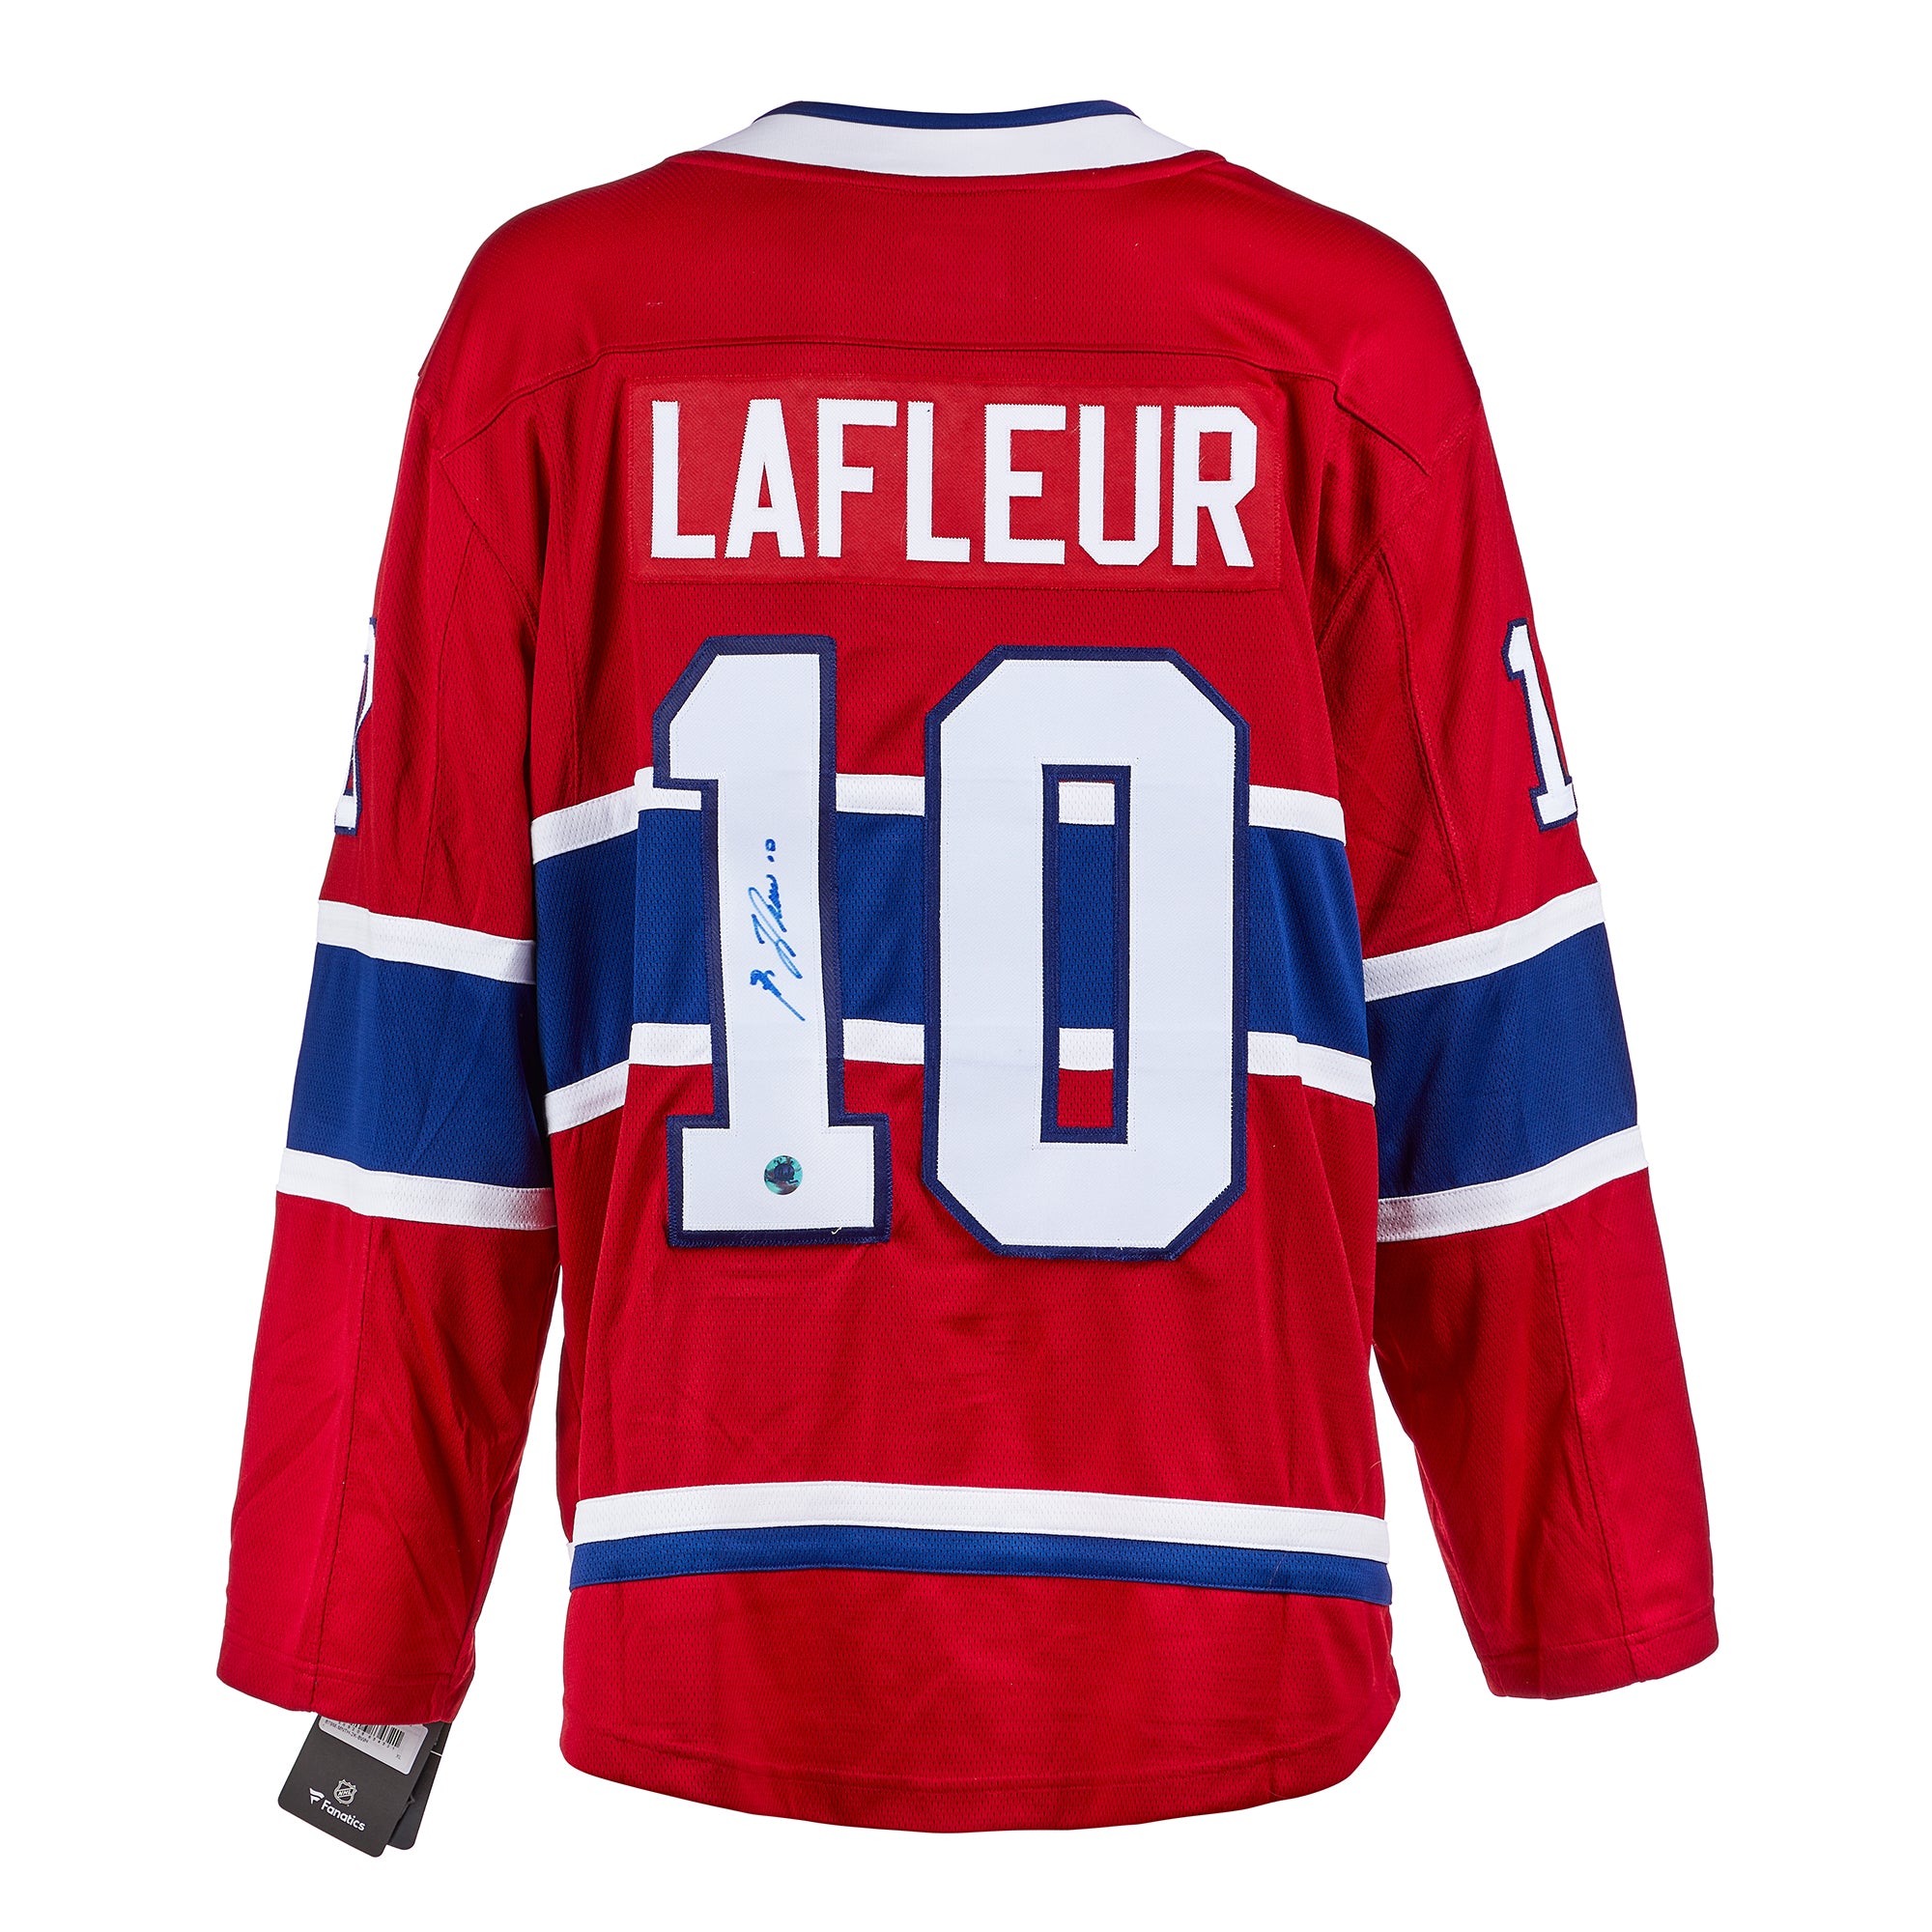 RSA Guy Lafleur Signed Montreal Blue Hockey Jersey (JSA)